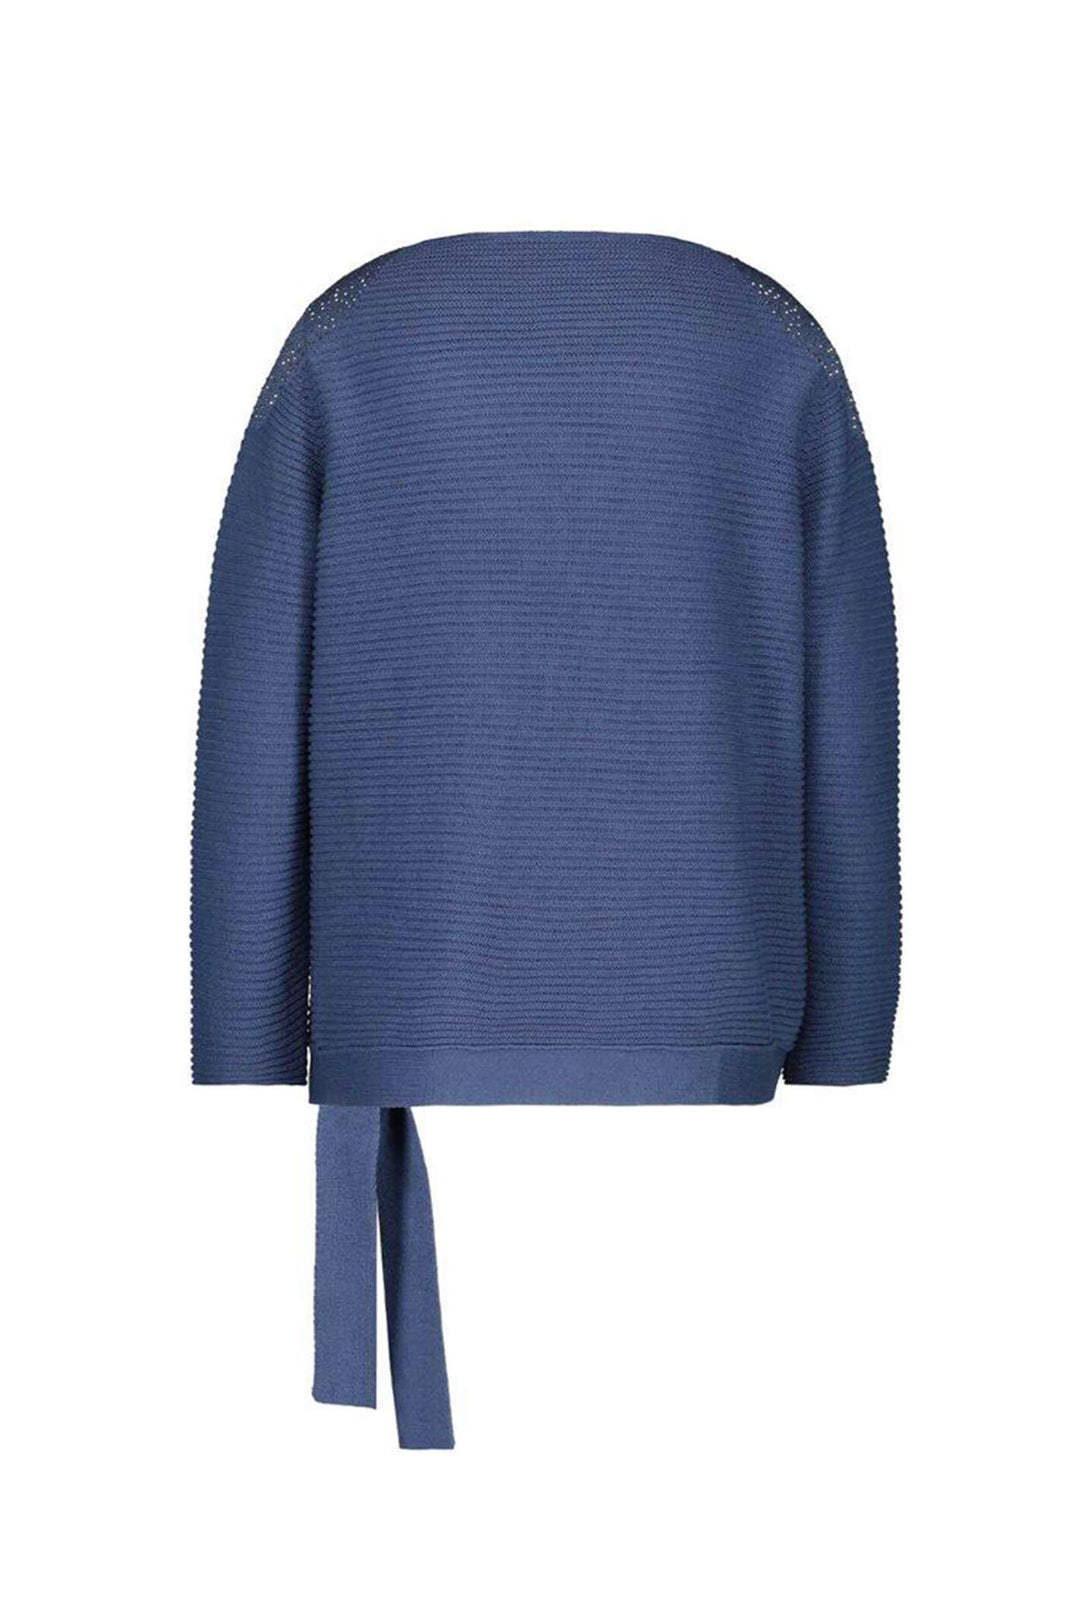 Monari 406129 Blue soft Cotton Sweater - Dotique